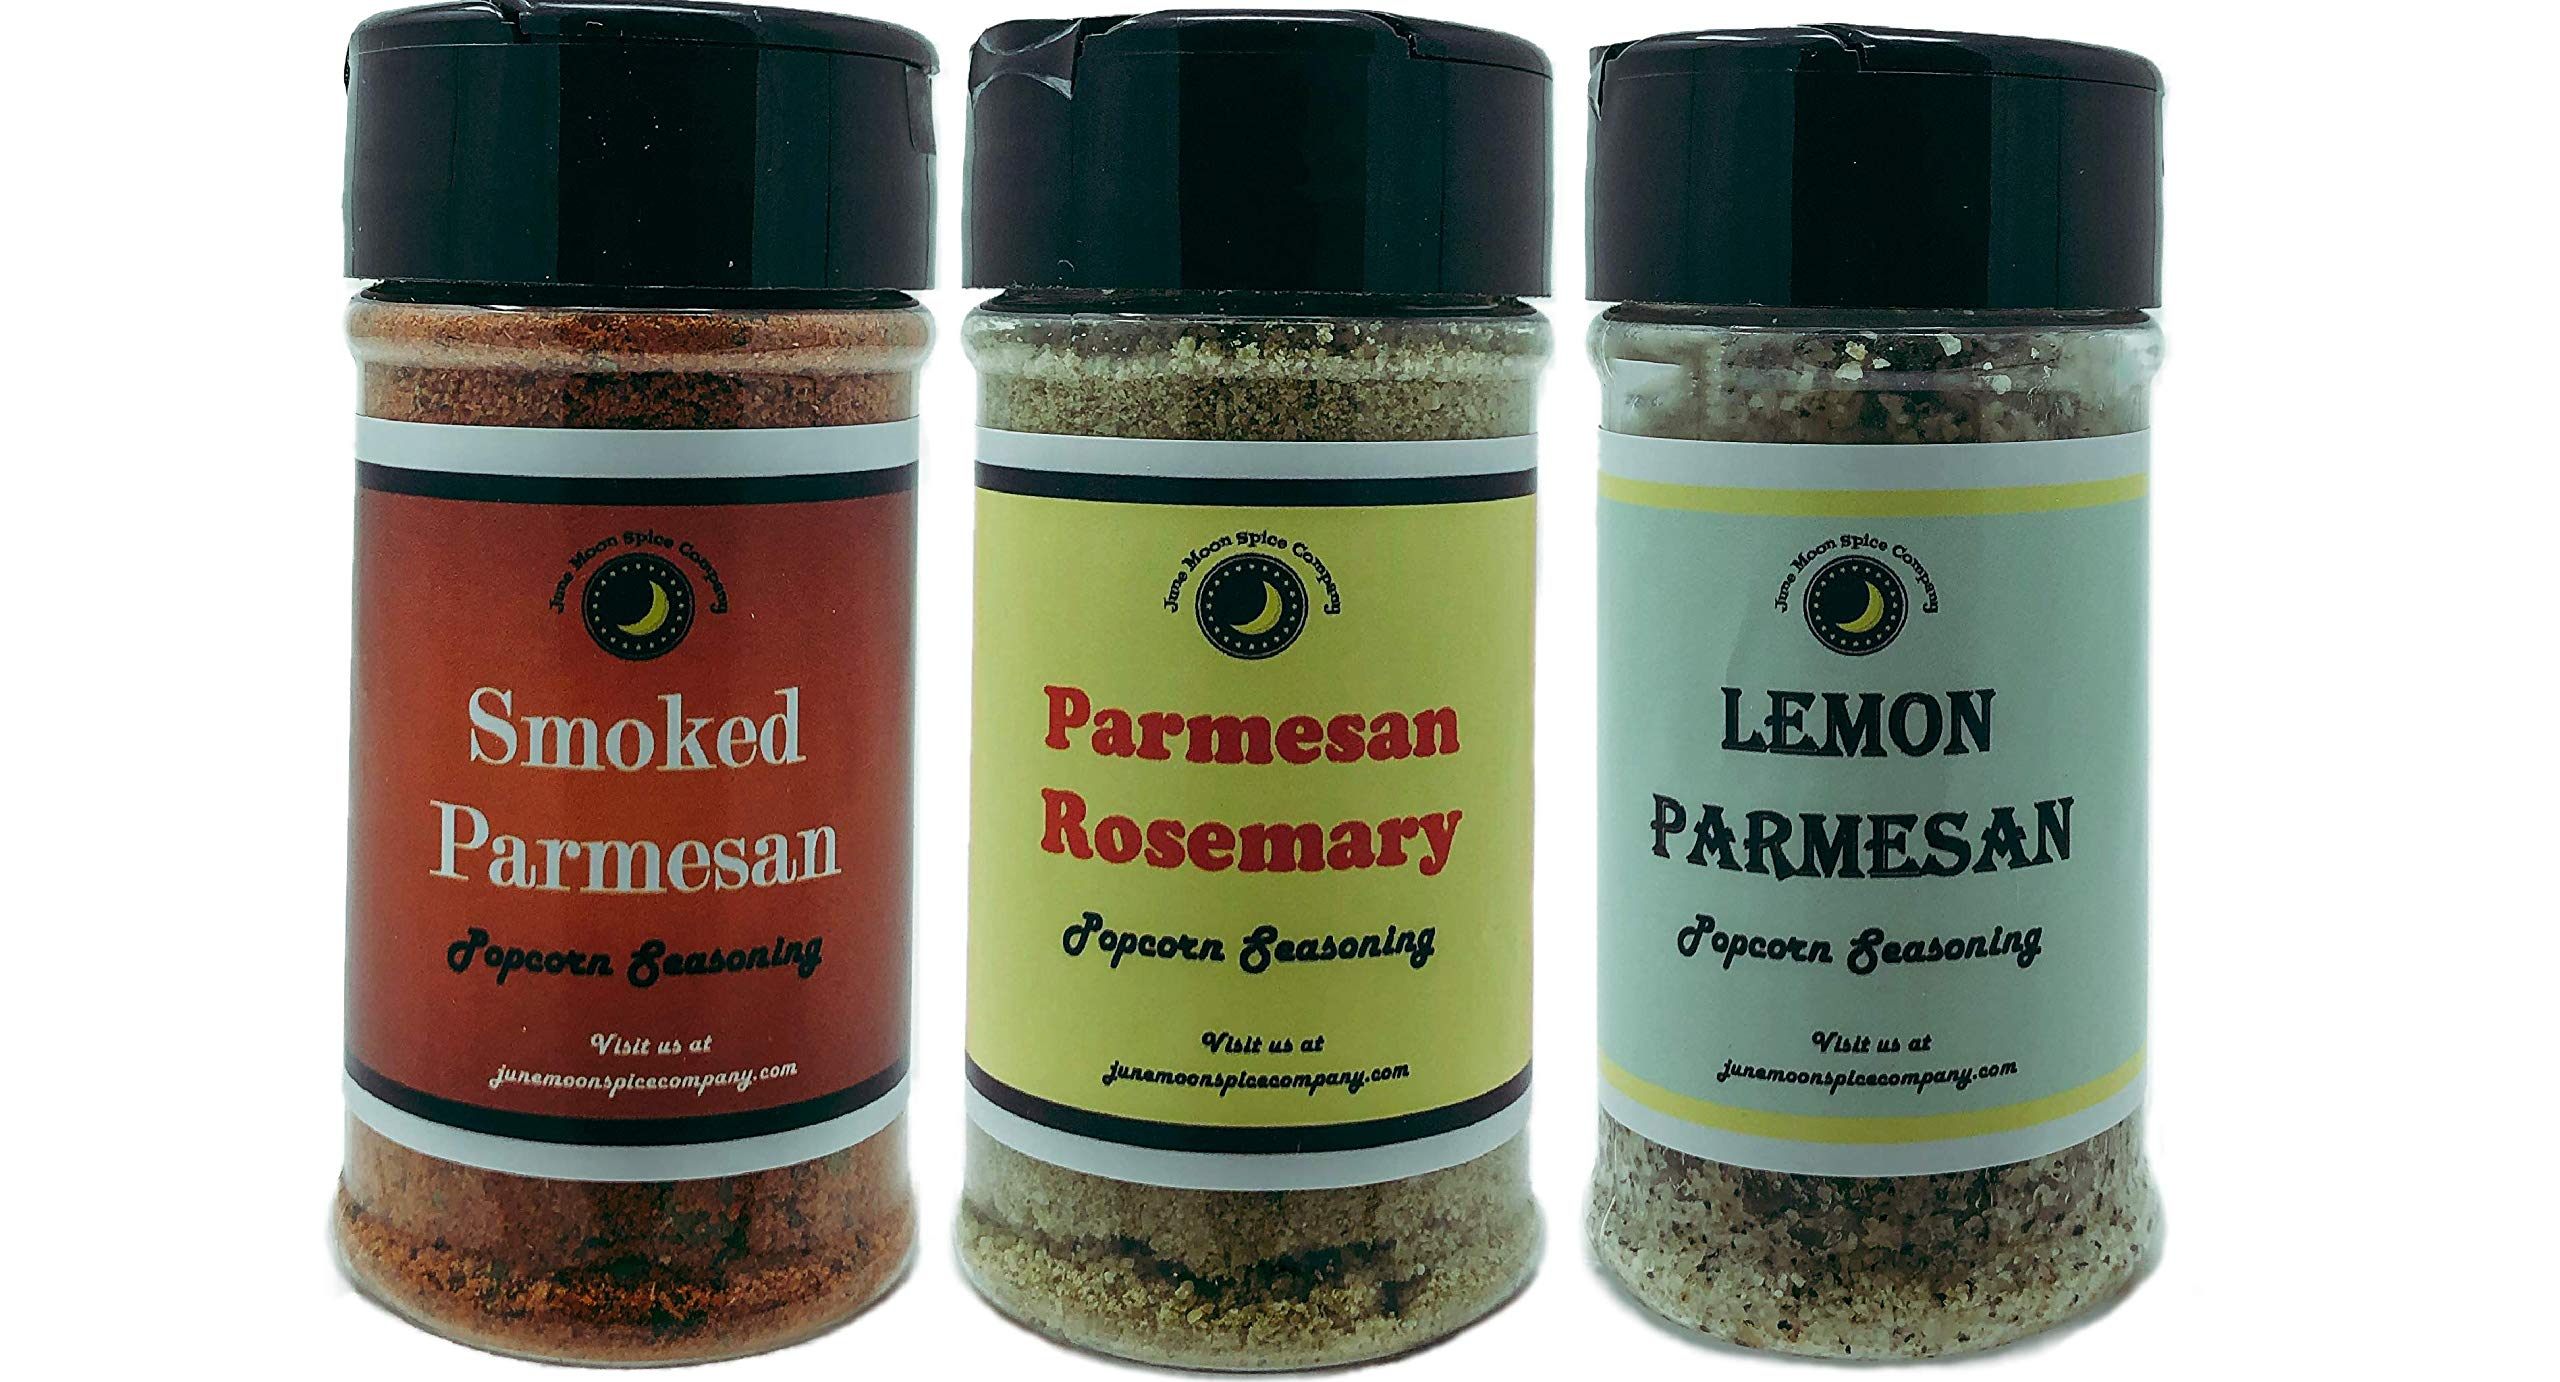 Popcorn Seasoning 3 Pack | Smoked Parmesan | Parmesan Rosemary | Lemon Parmesan